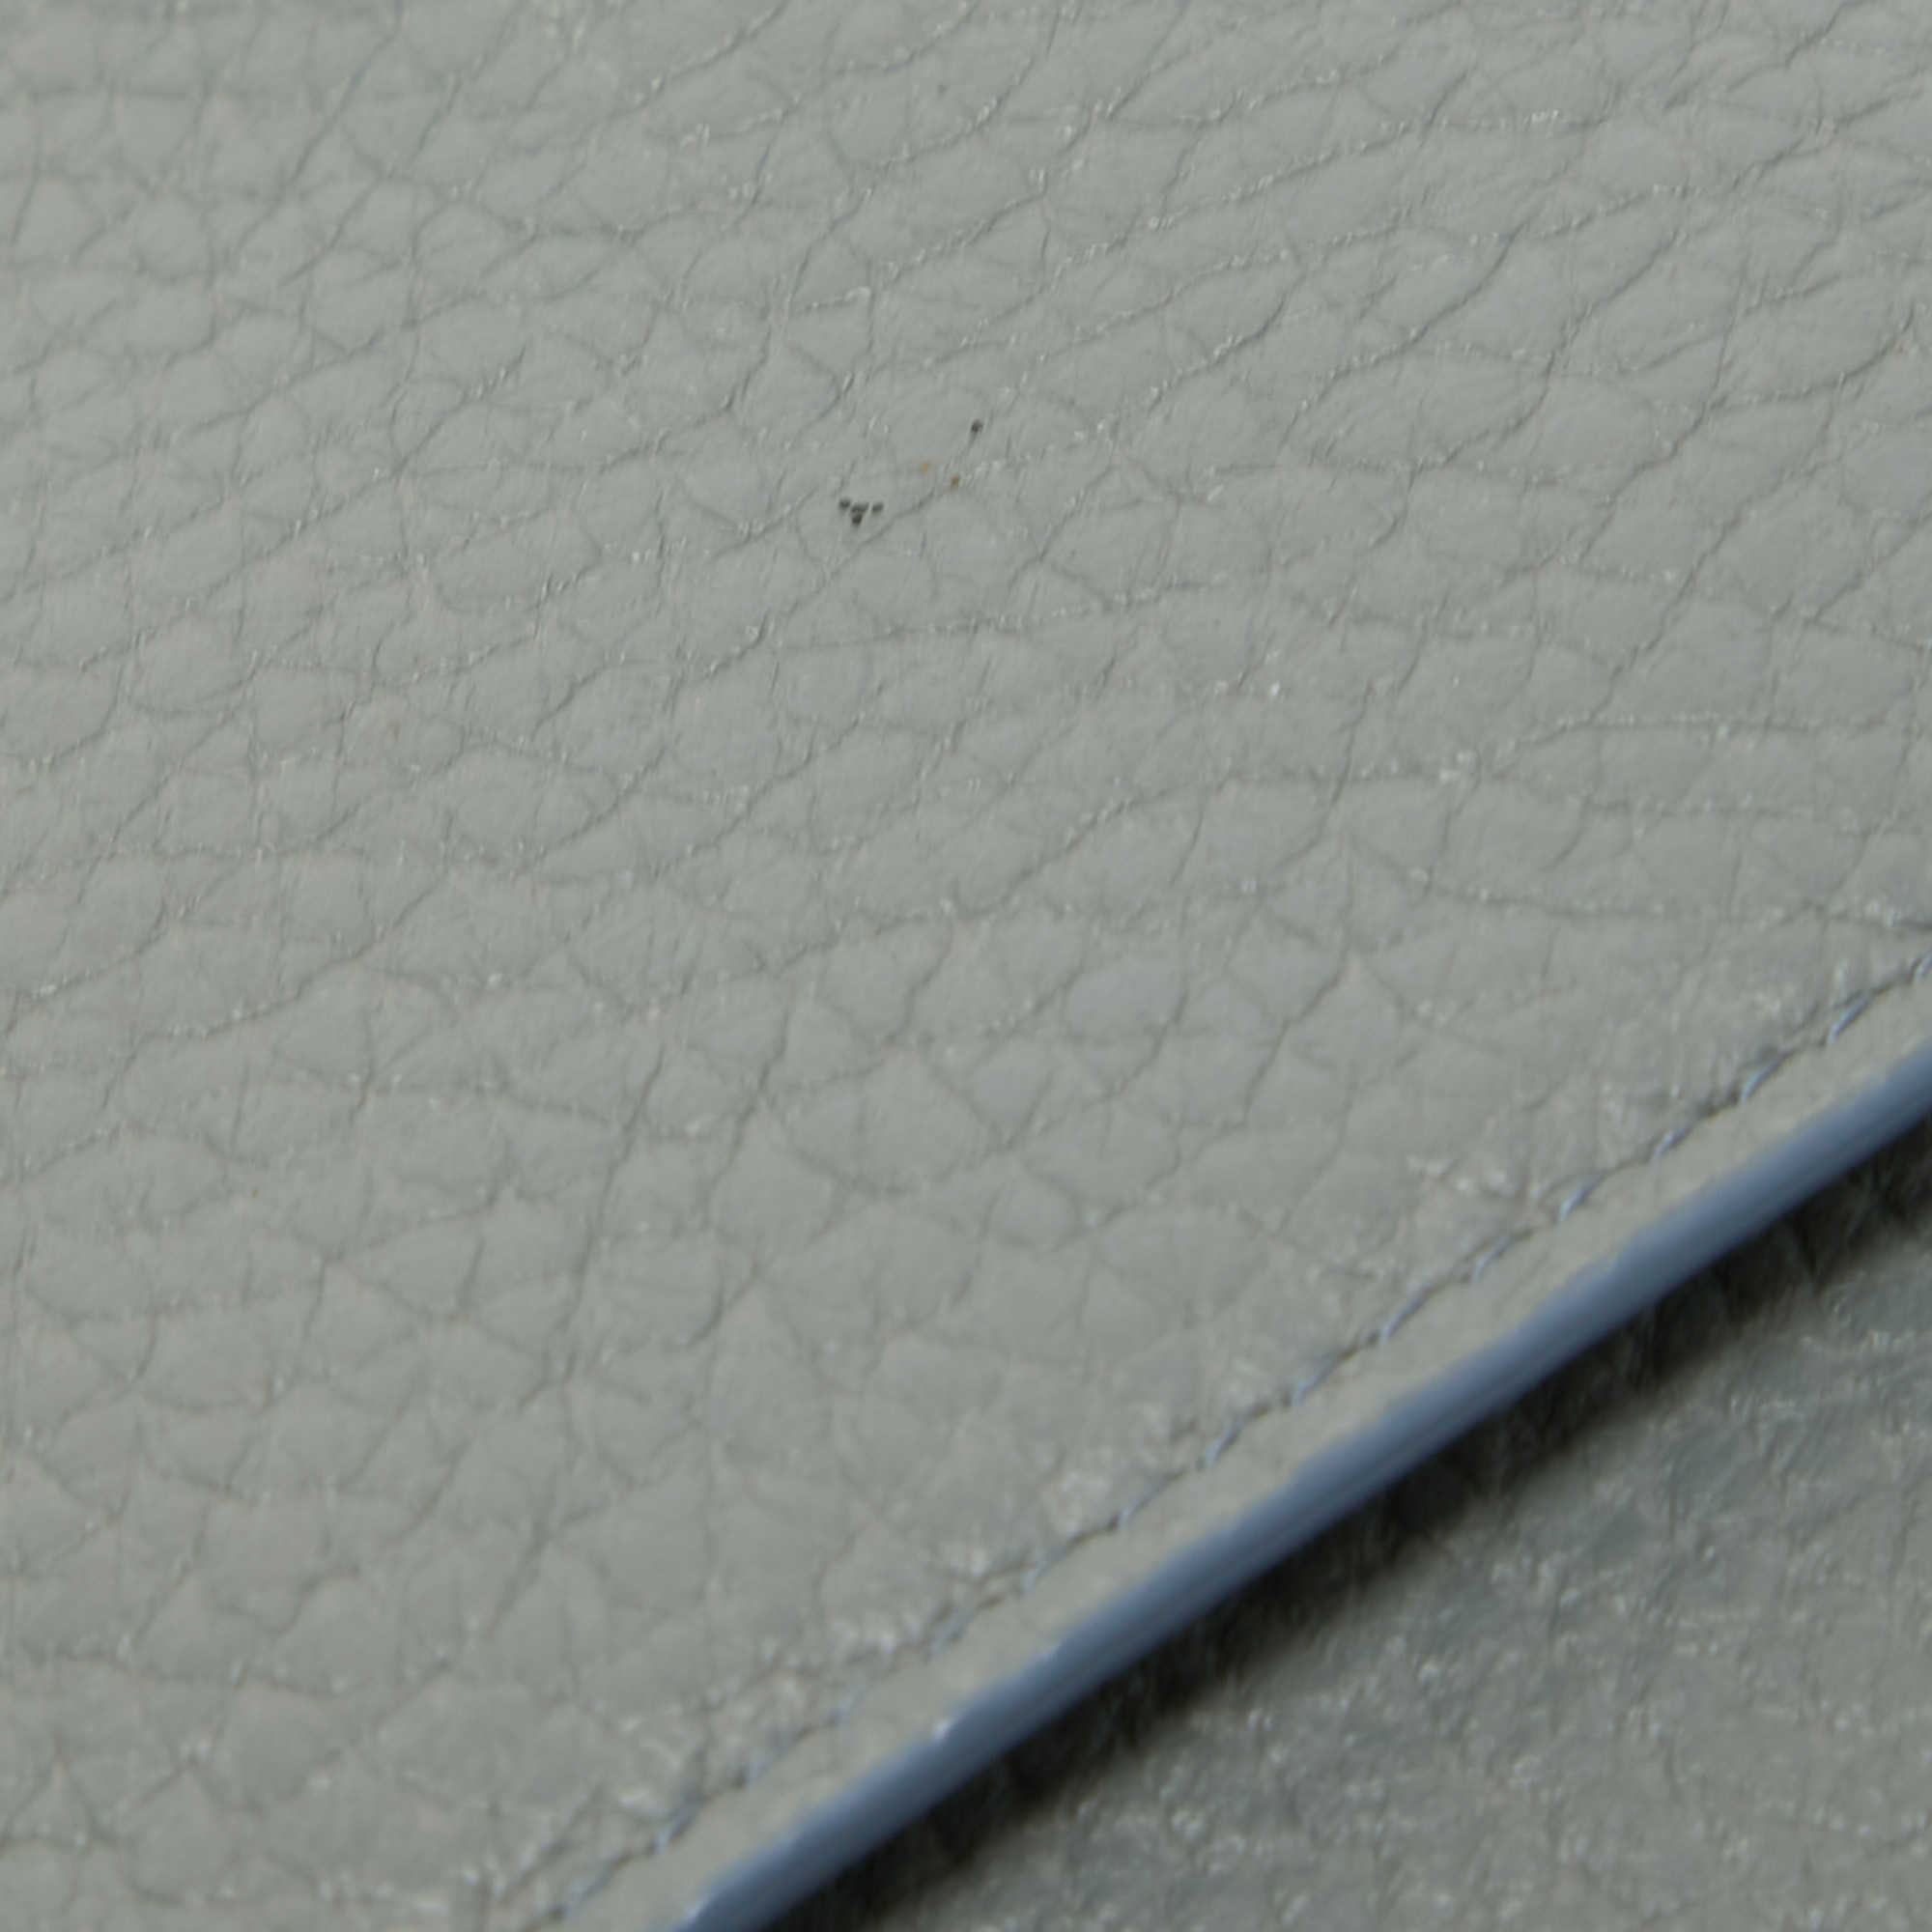 Giorgio Armani Grey Leather Clutch